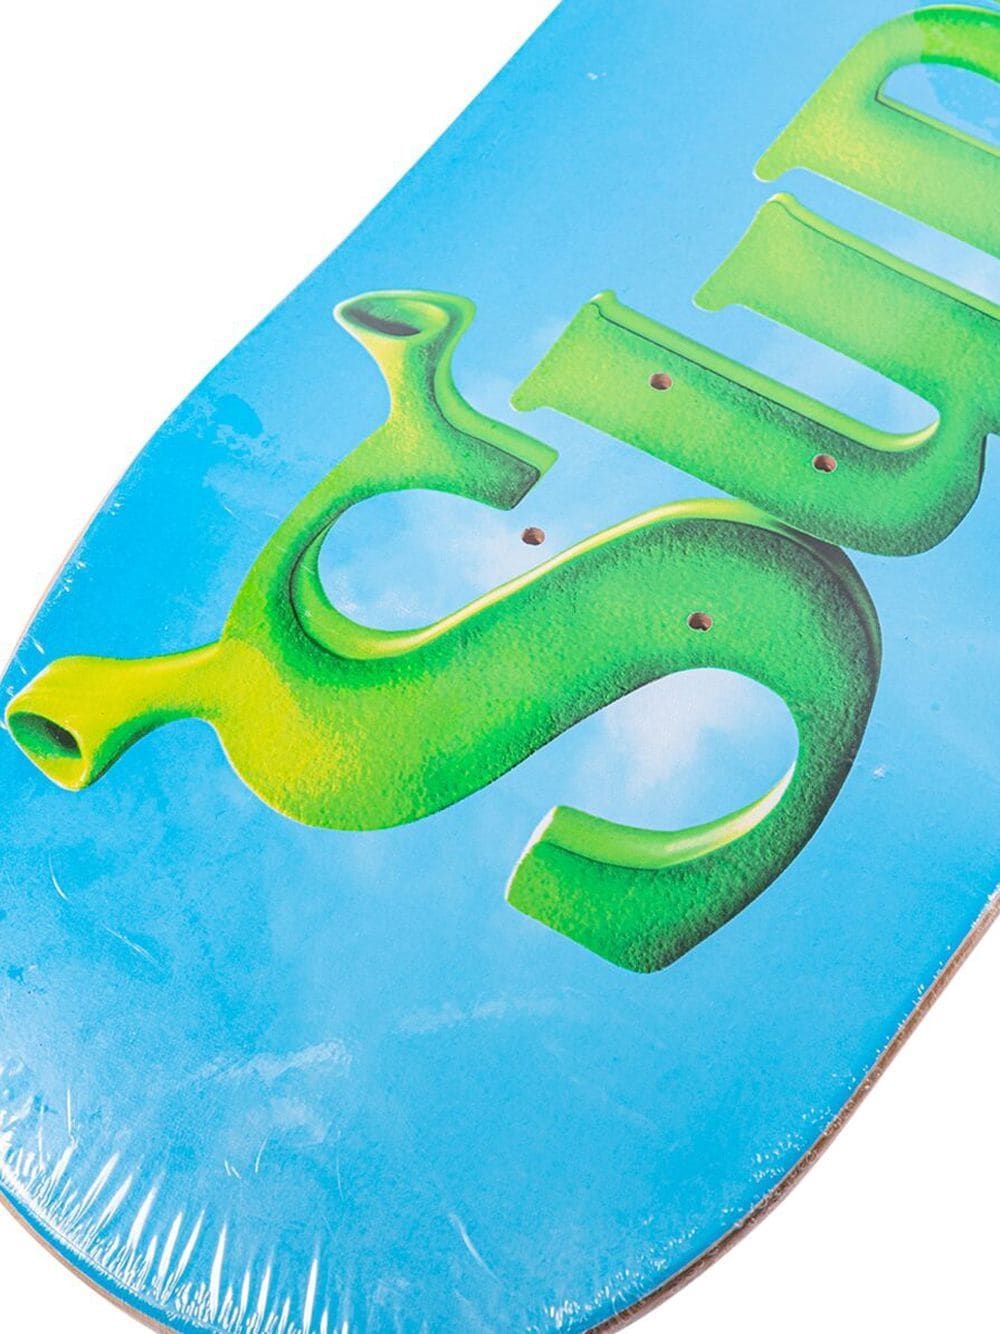 Supreme Shrek Skateboard Deck- Red